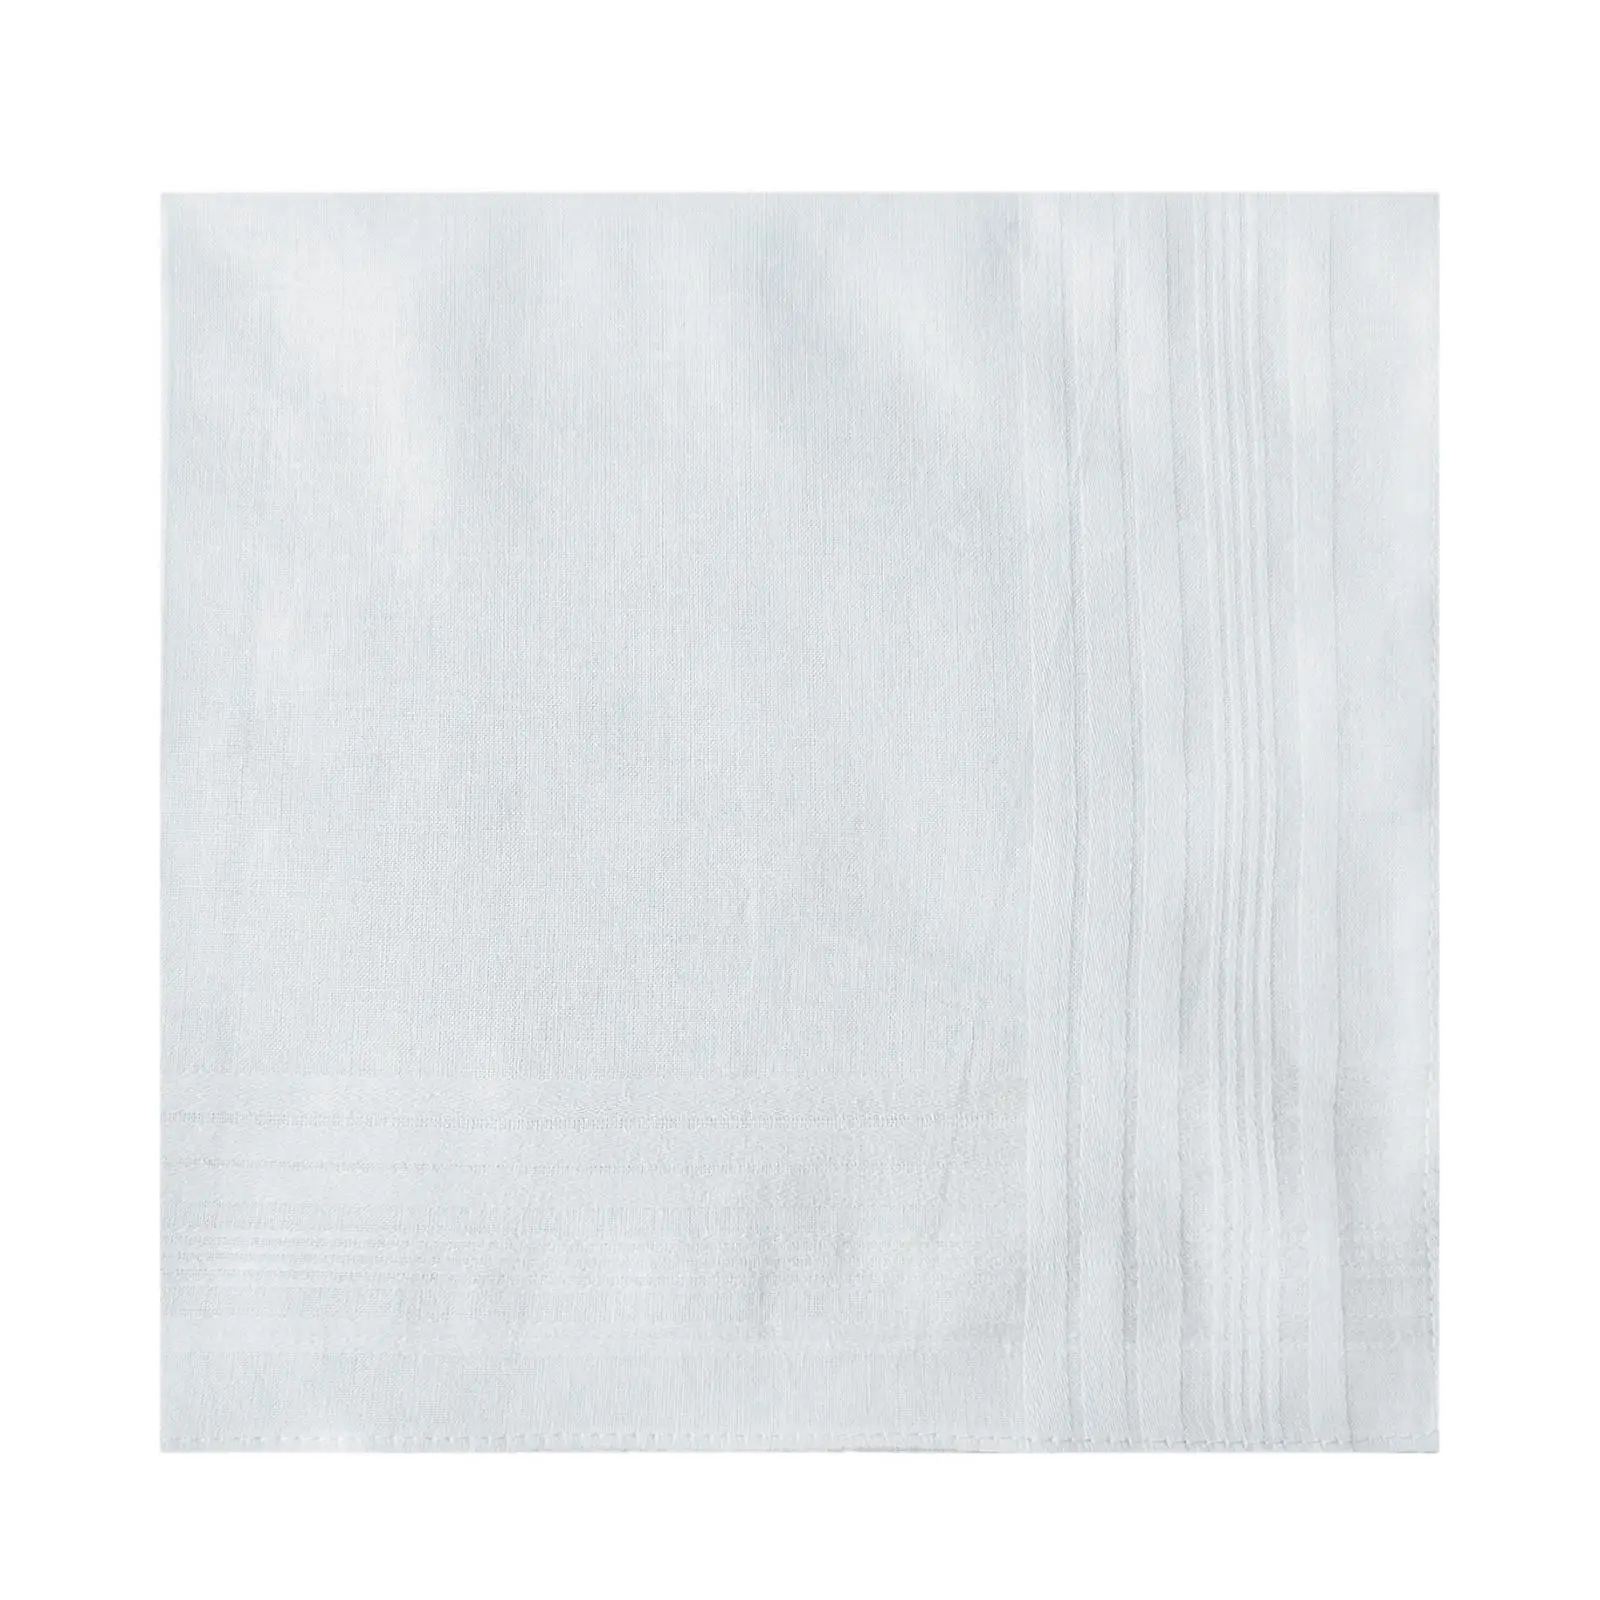 5Pcs White Cotton Handkerchiefs for Men 16inch Gifts Hanky Square Pocket